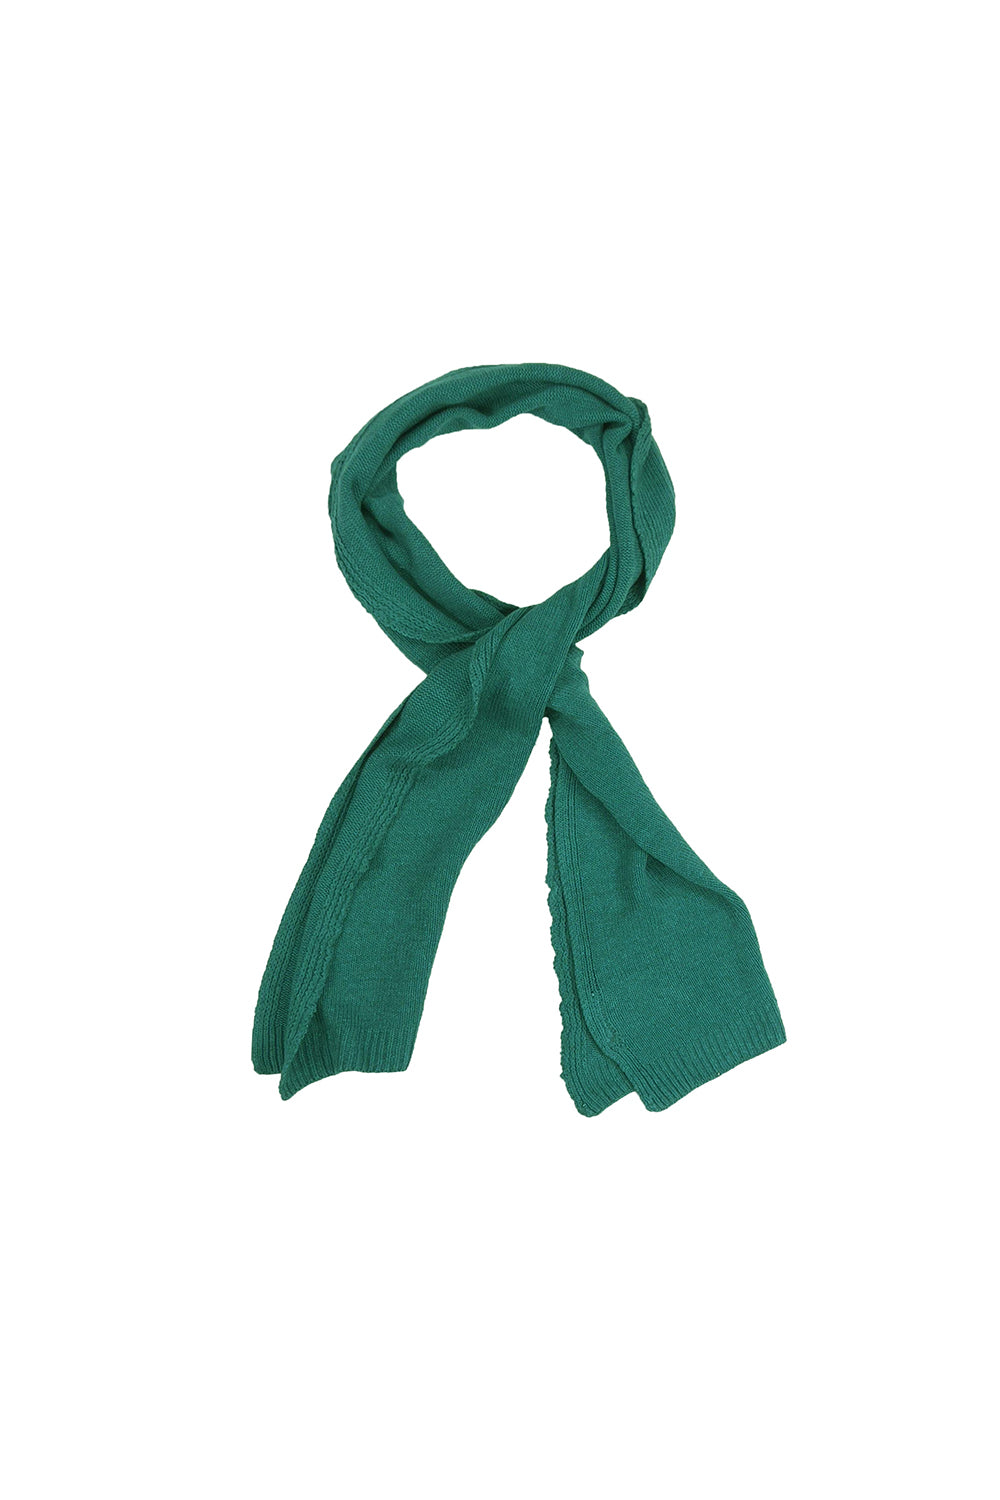 Hemp Wool Scarf | Jungmaven Hemp Clothing & Accessories / Color: Ivy Green